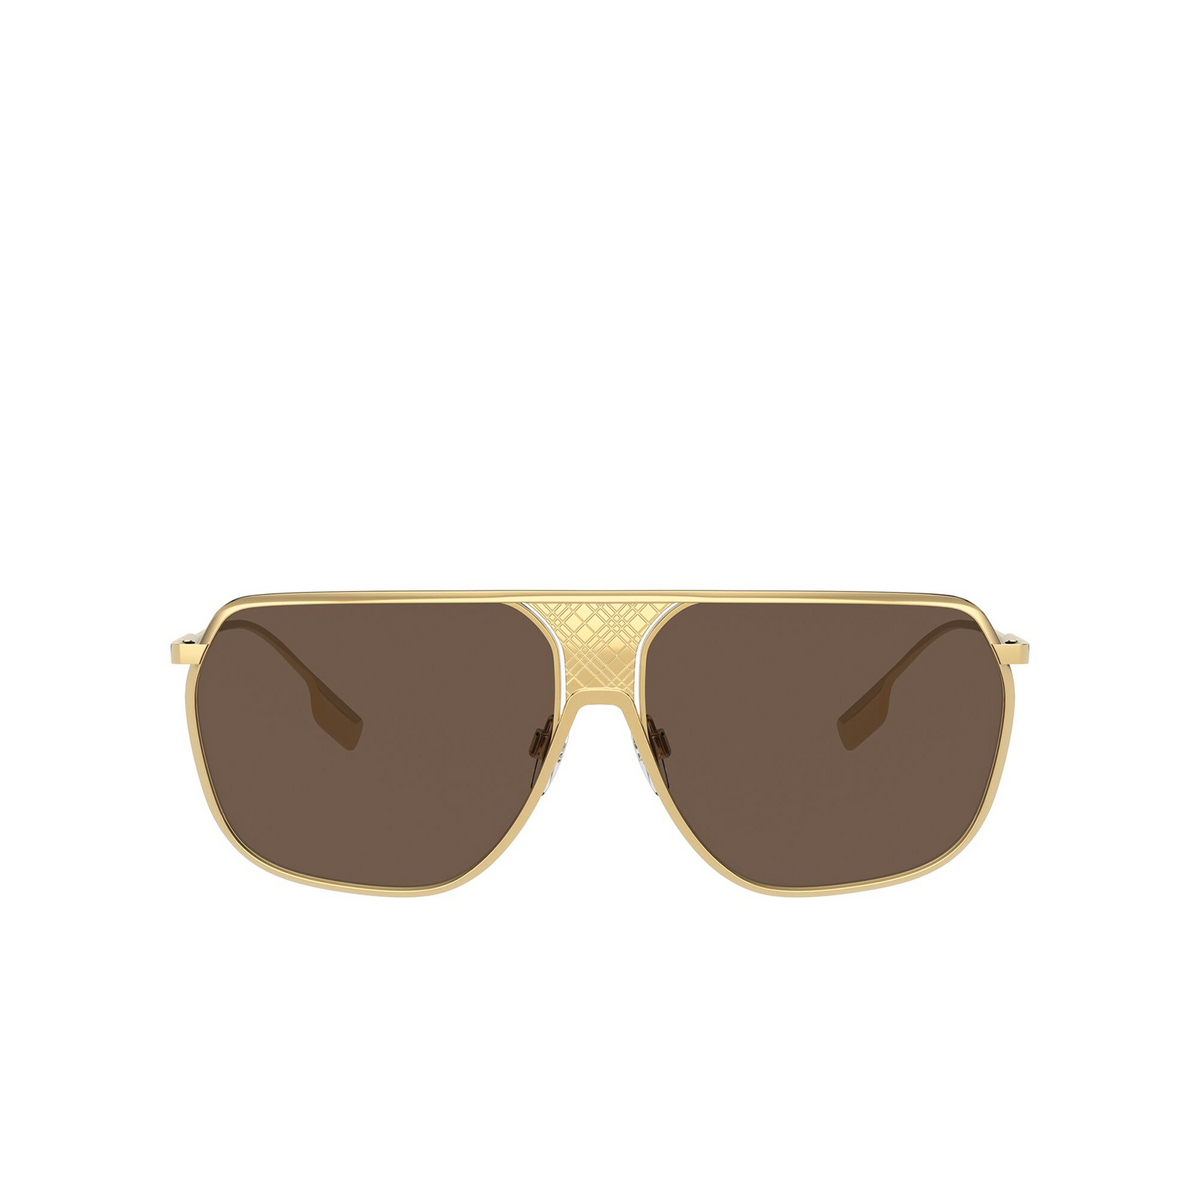 Burberry ADAM Sunglasses 101773 Gold - front view